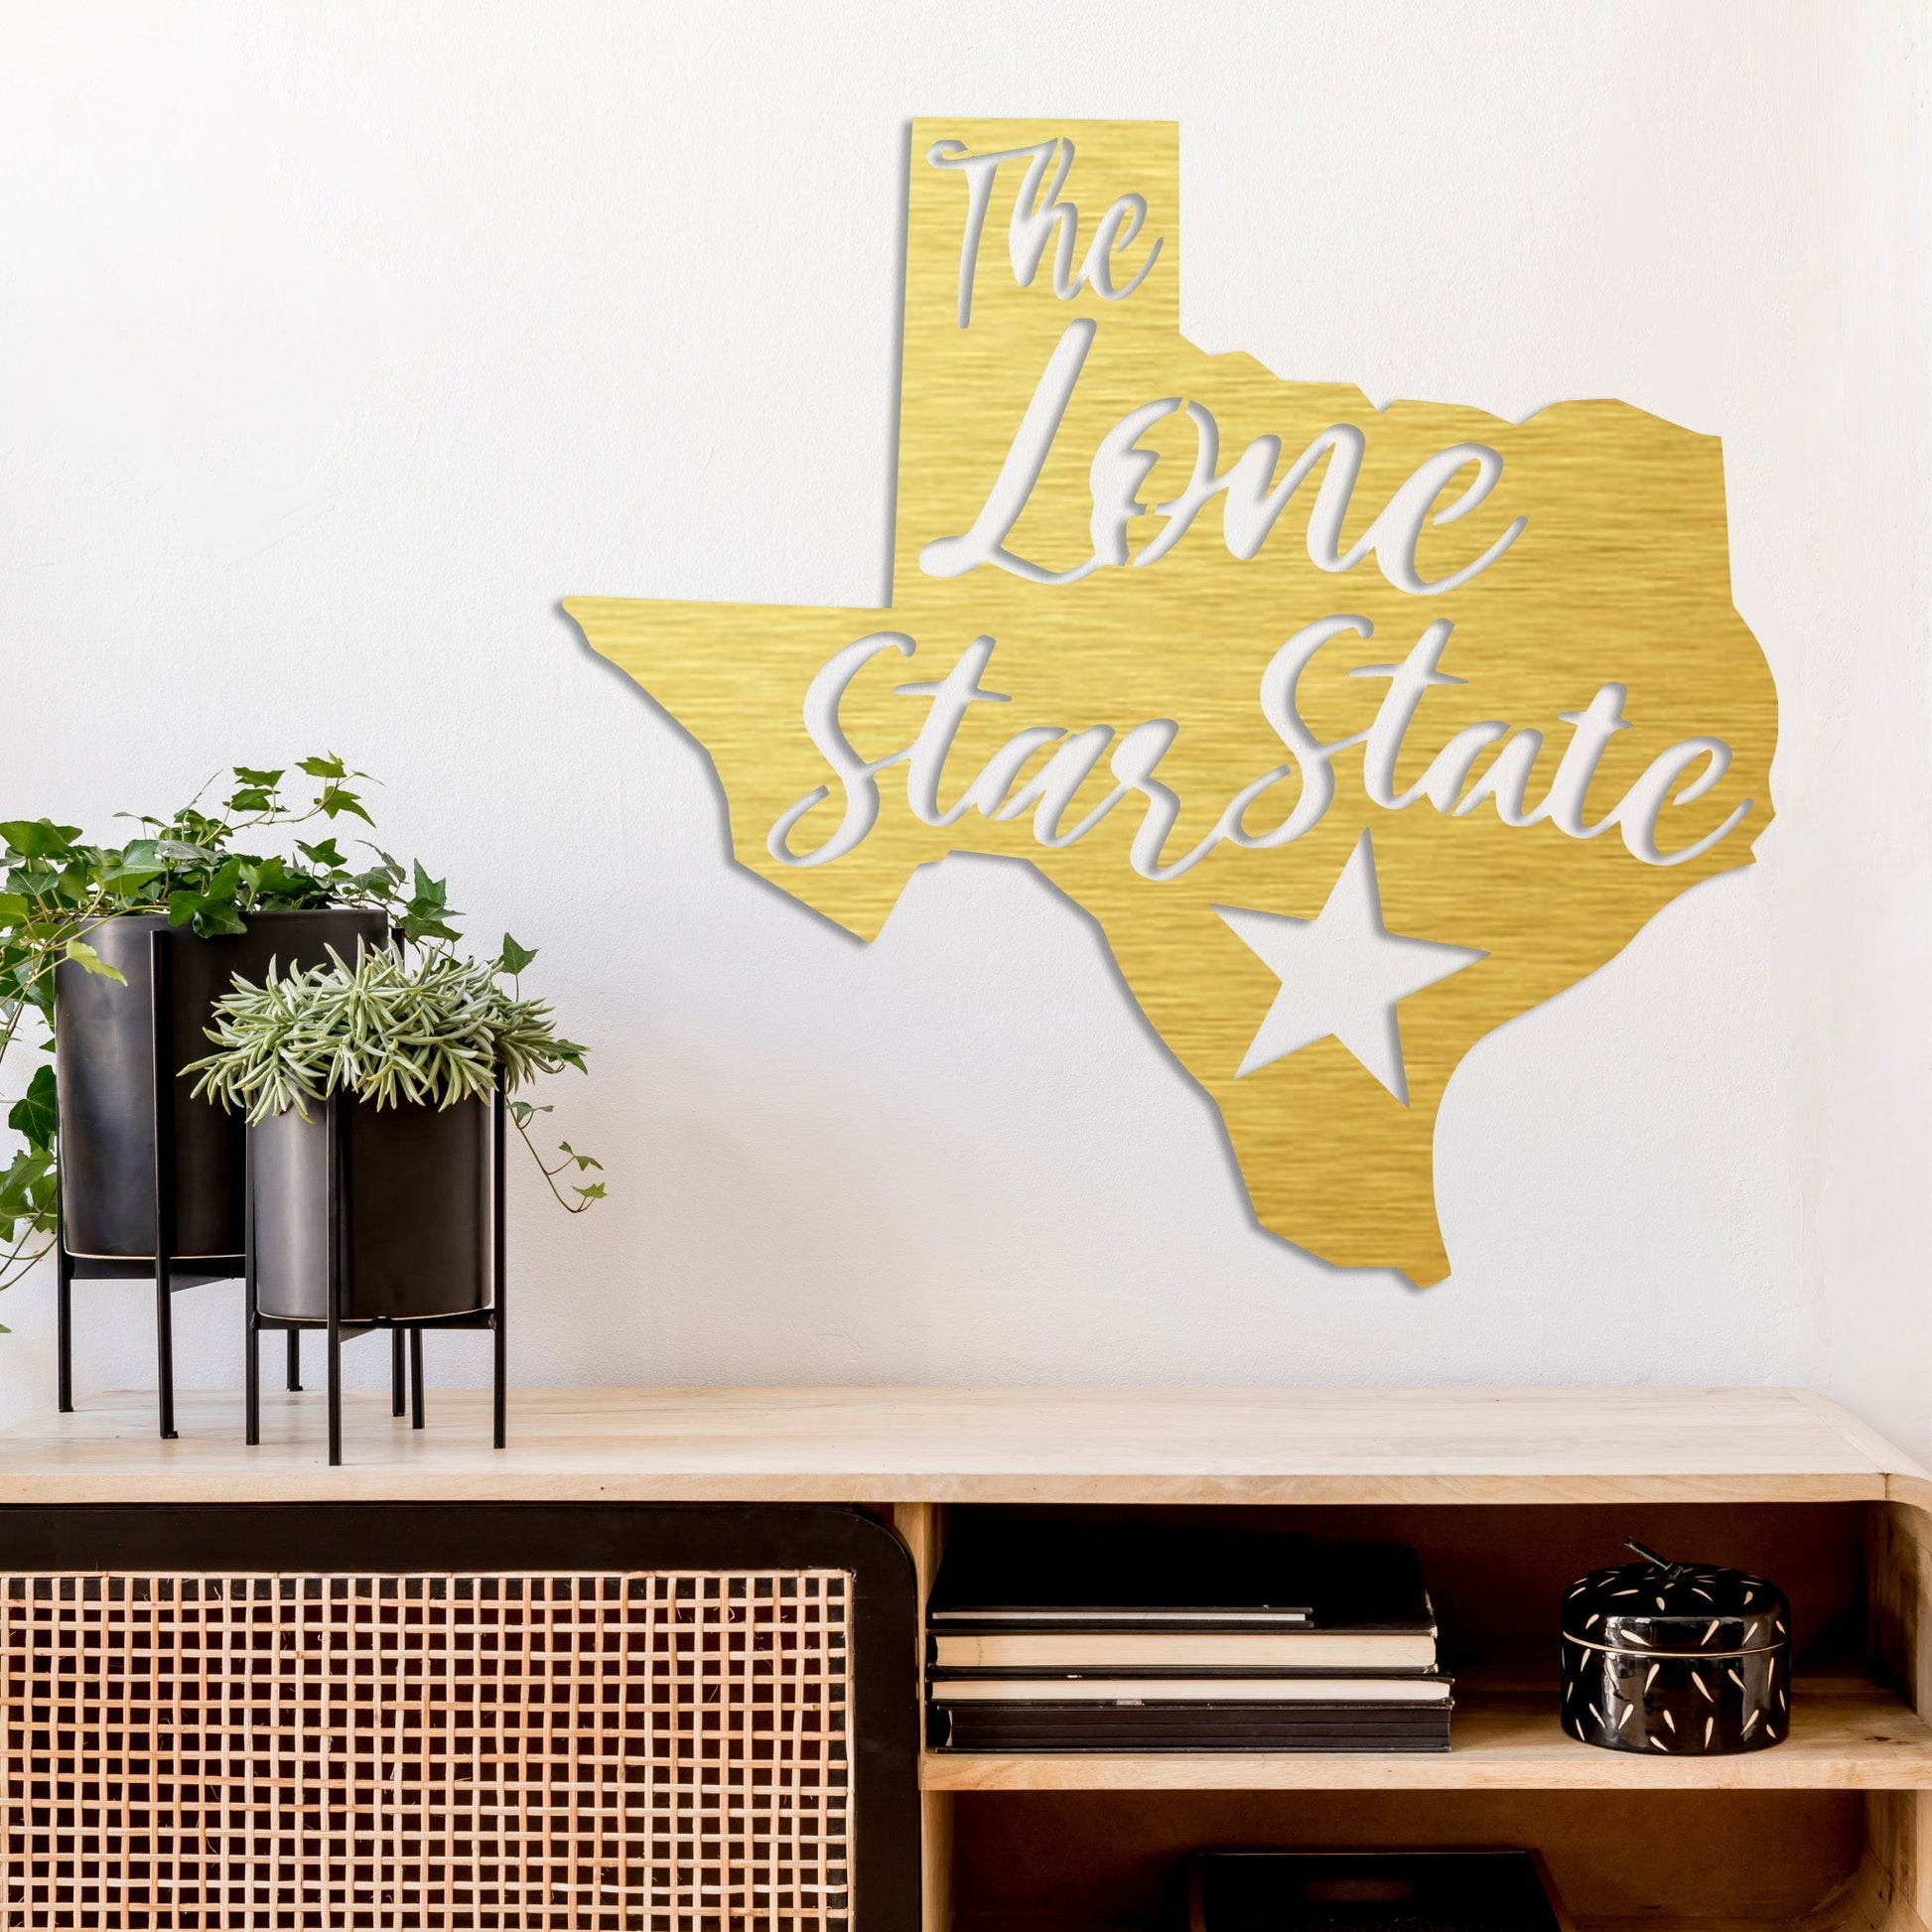 MetalPlex - Lone Star State Texas - Metal Wall Art - Angler's Pro Tackle & Outdoors